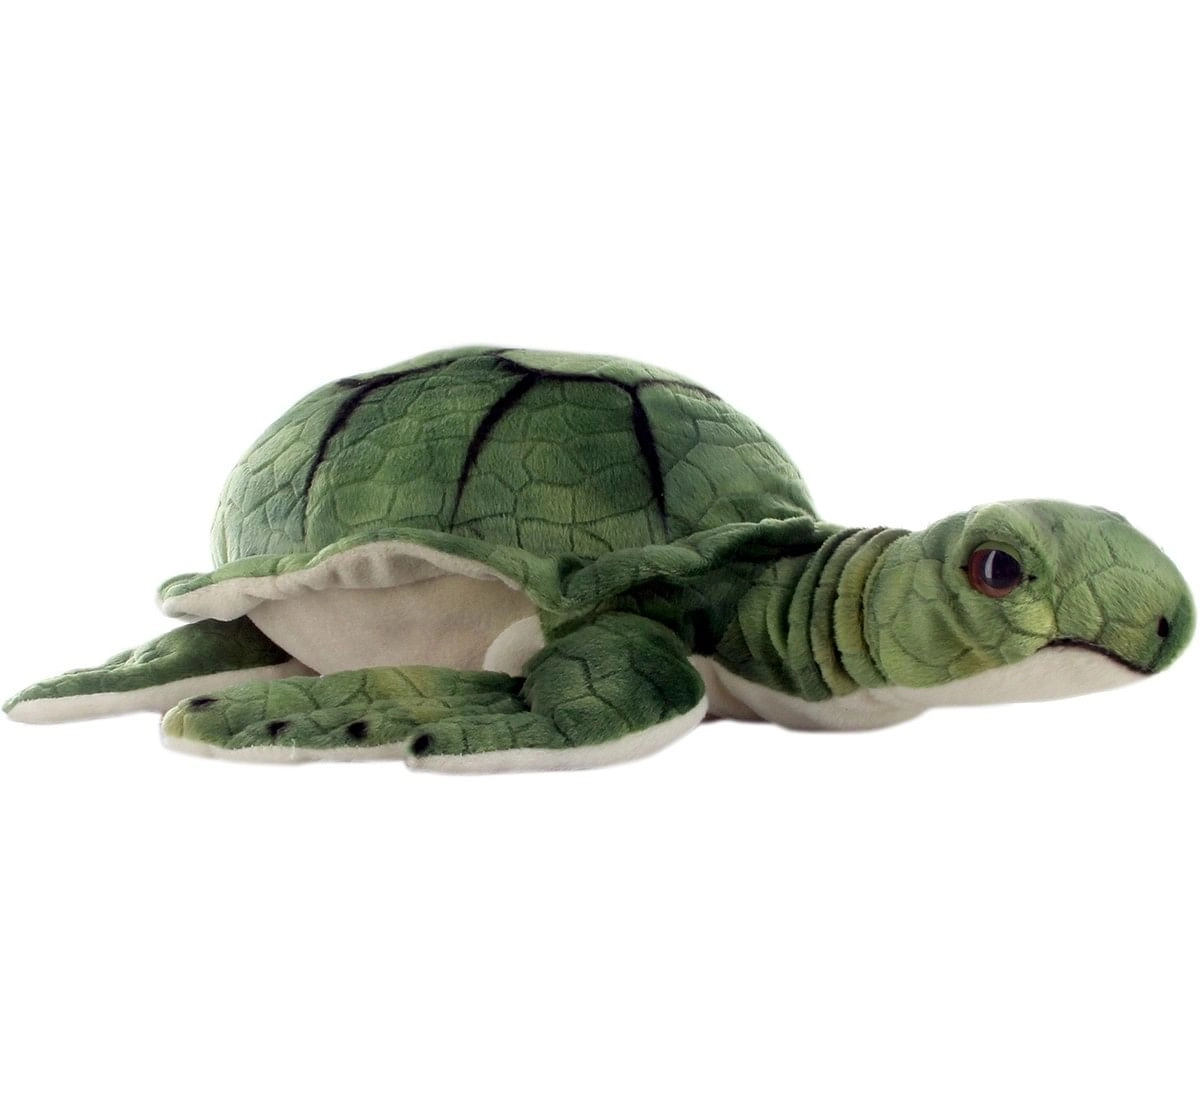  Hamleys Sea Turtle Soft Toy (Green) Animals & Birds for Kids age 0M+ - 10 Cm (Green)